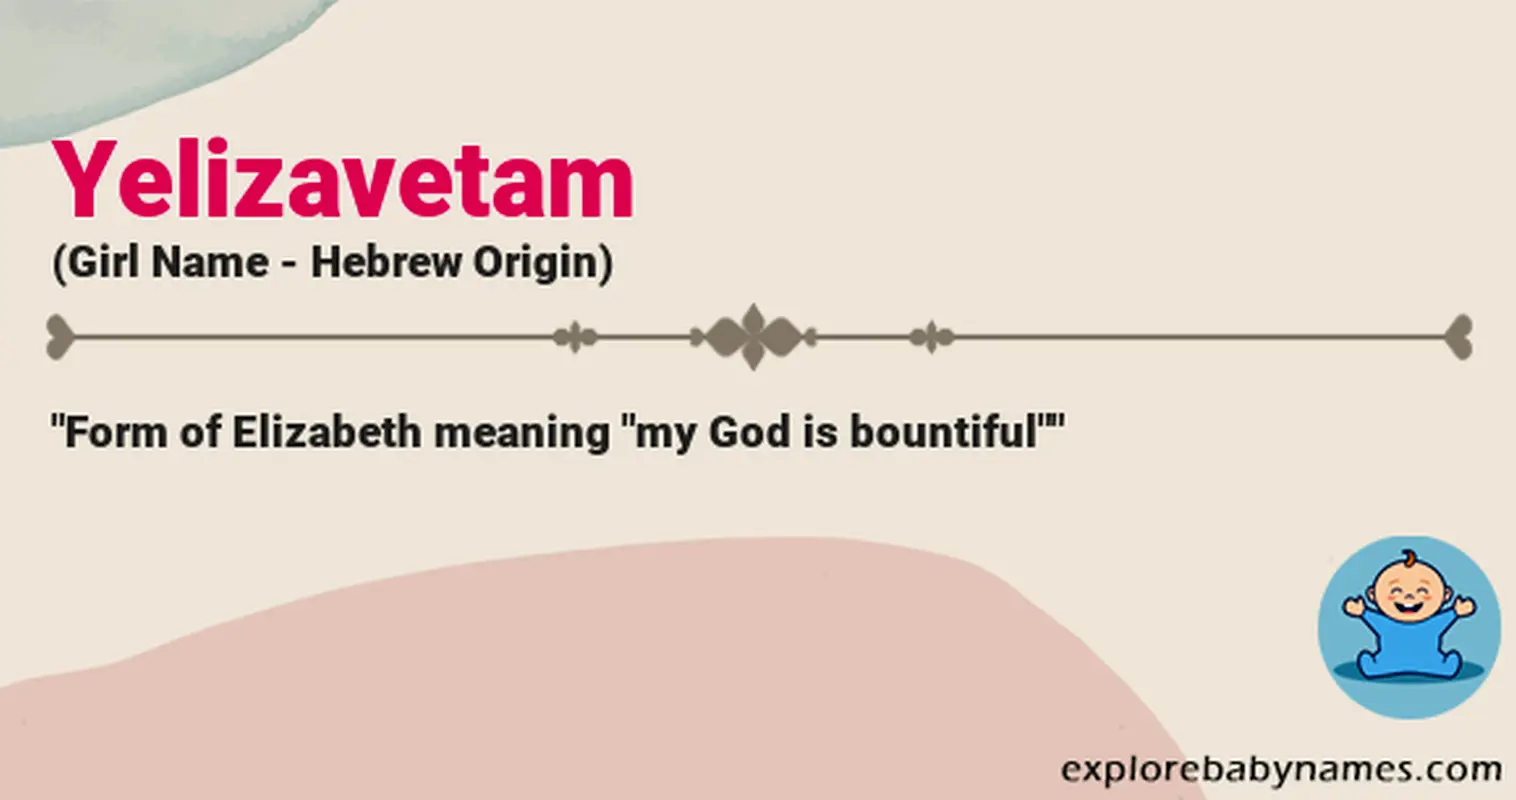 Meaning of Yelizavetam